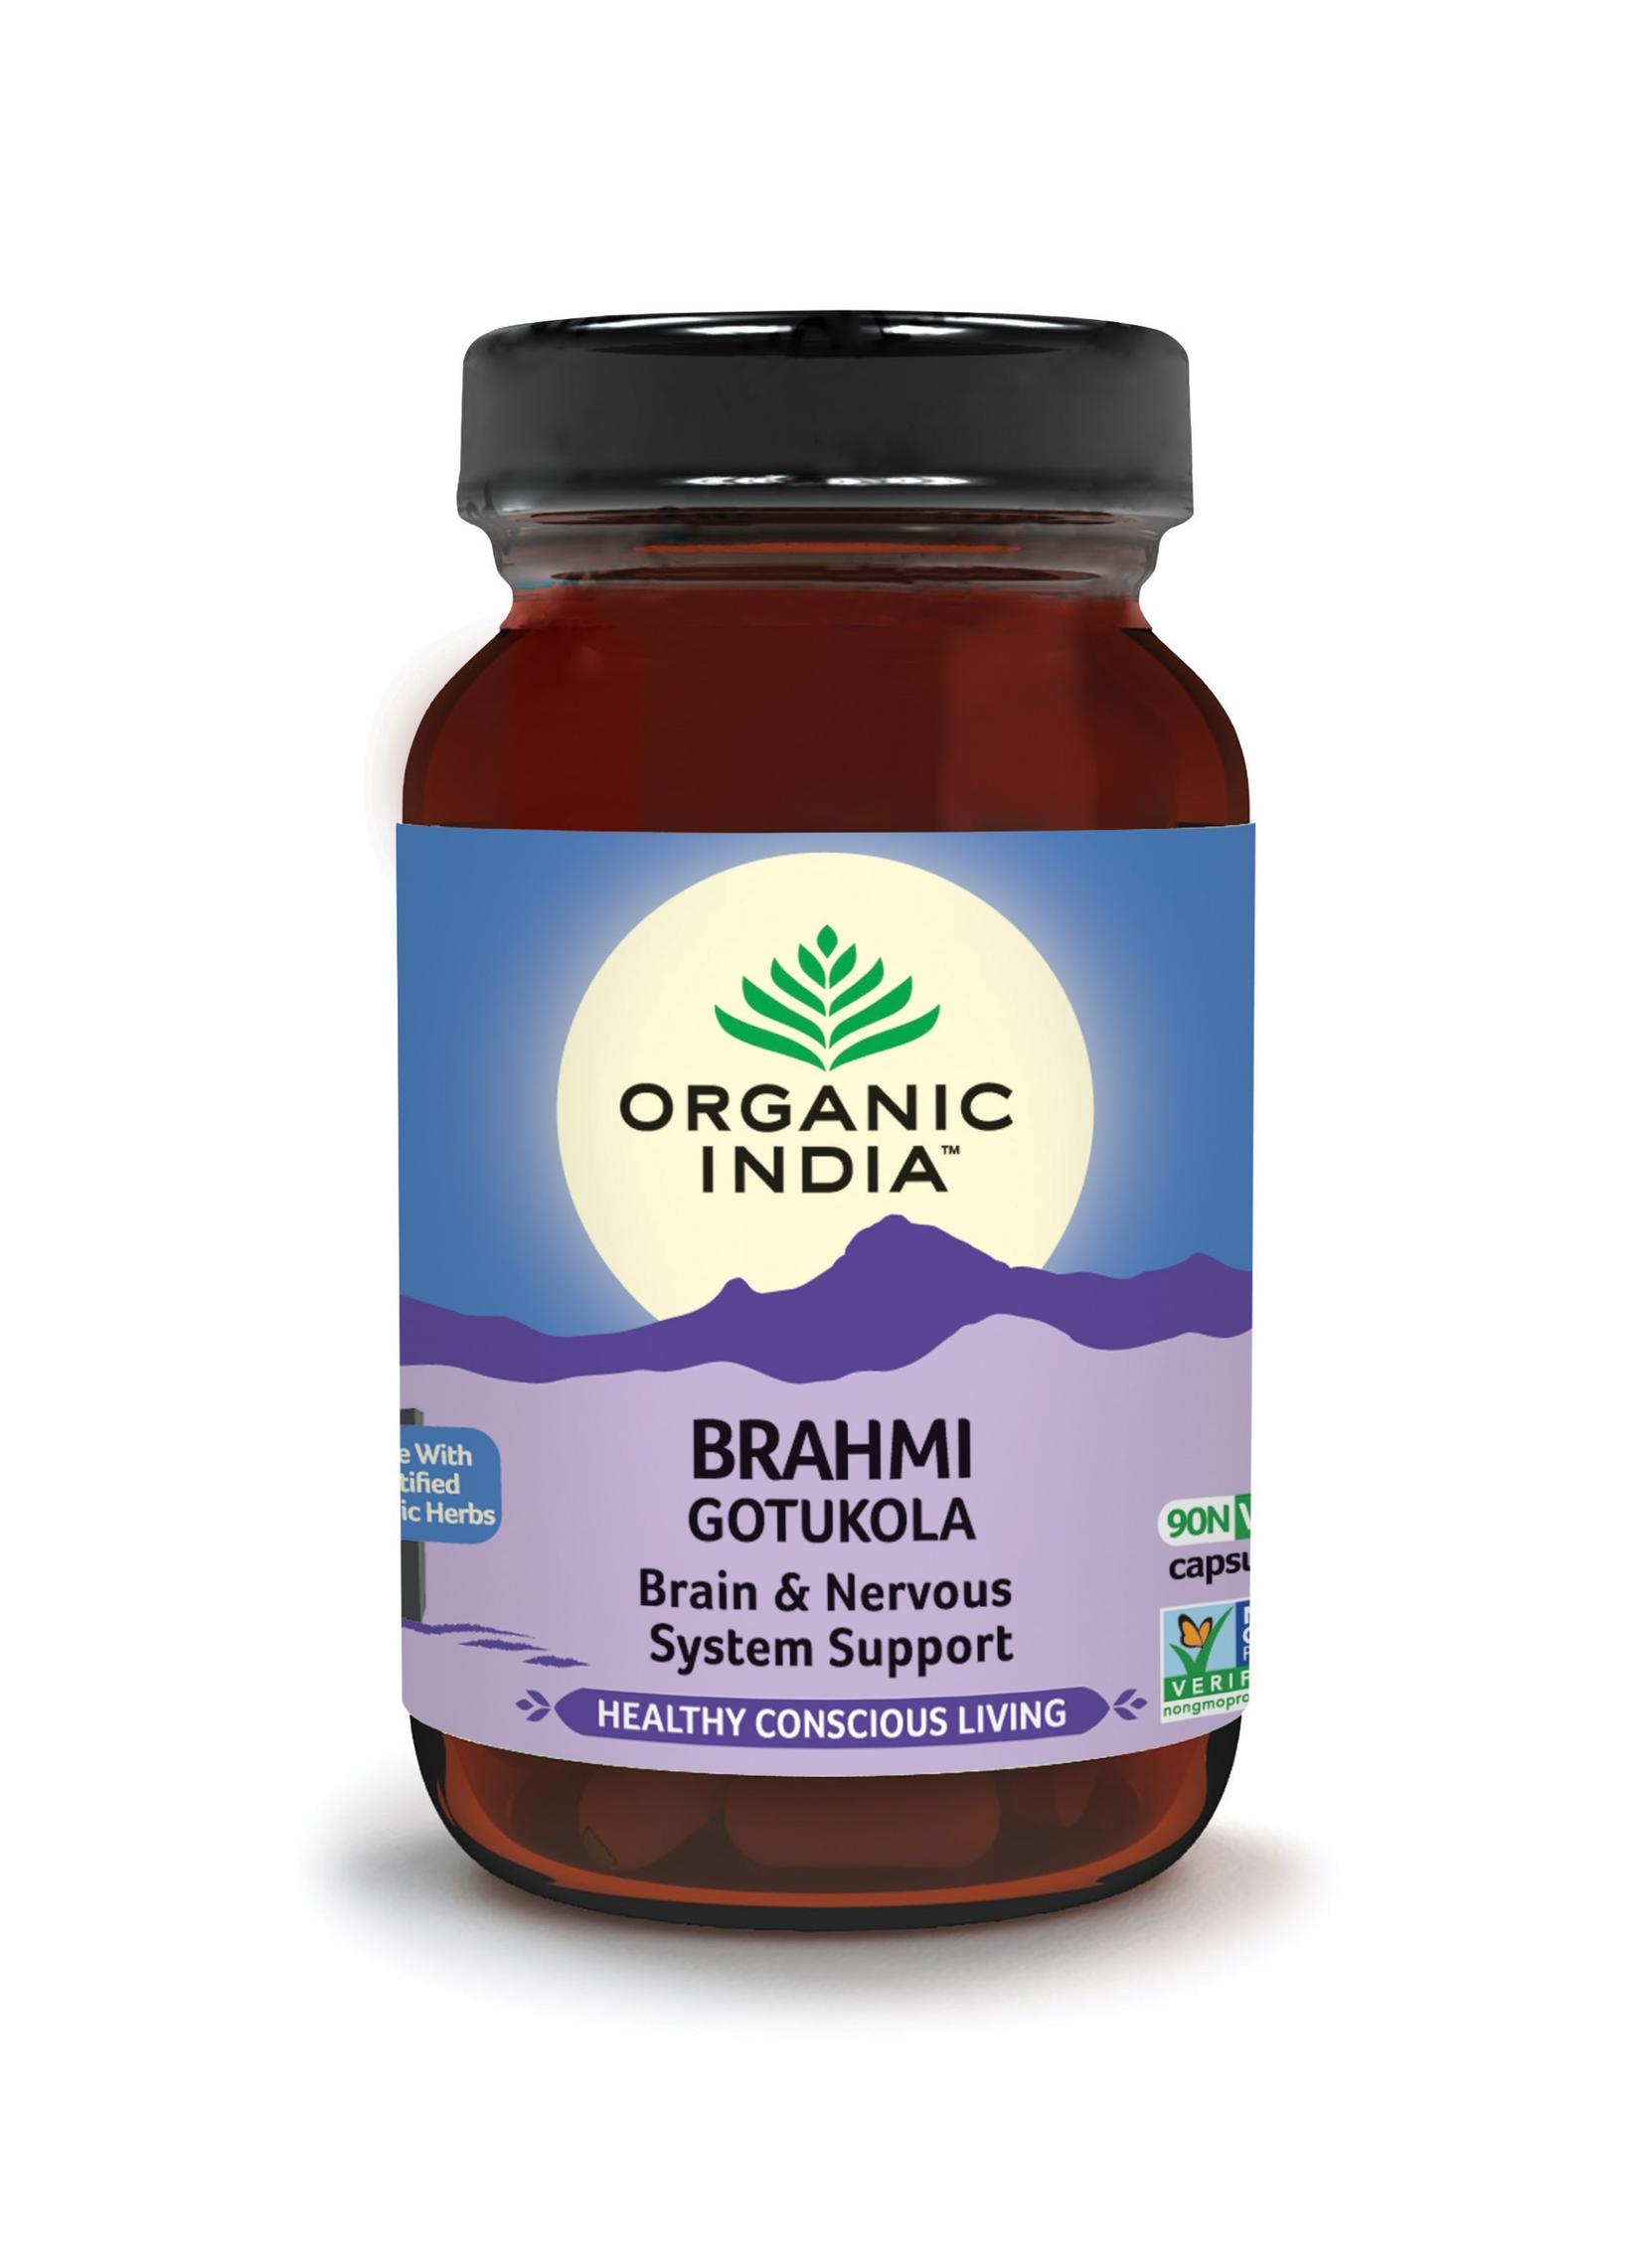 Selected image for ORGANIC INDIA Organski suplement Brahmi